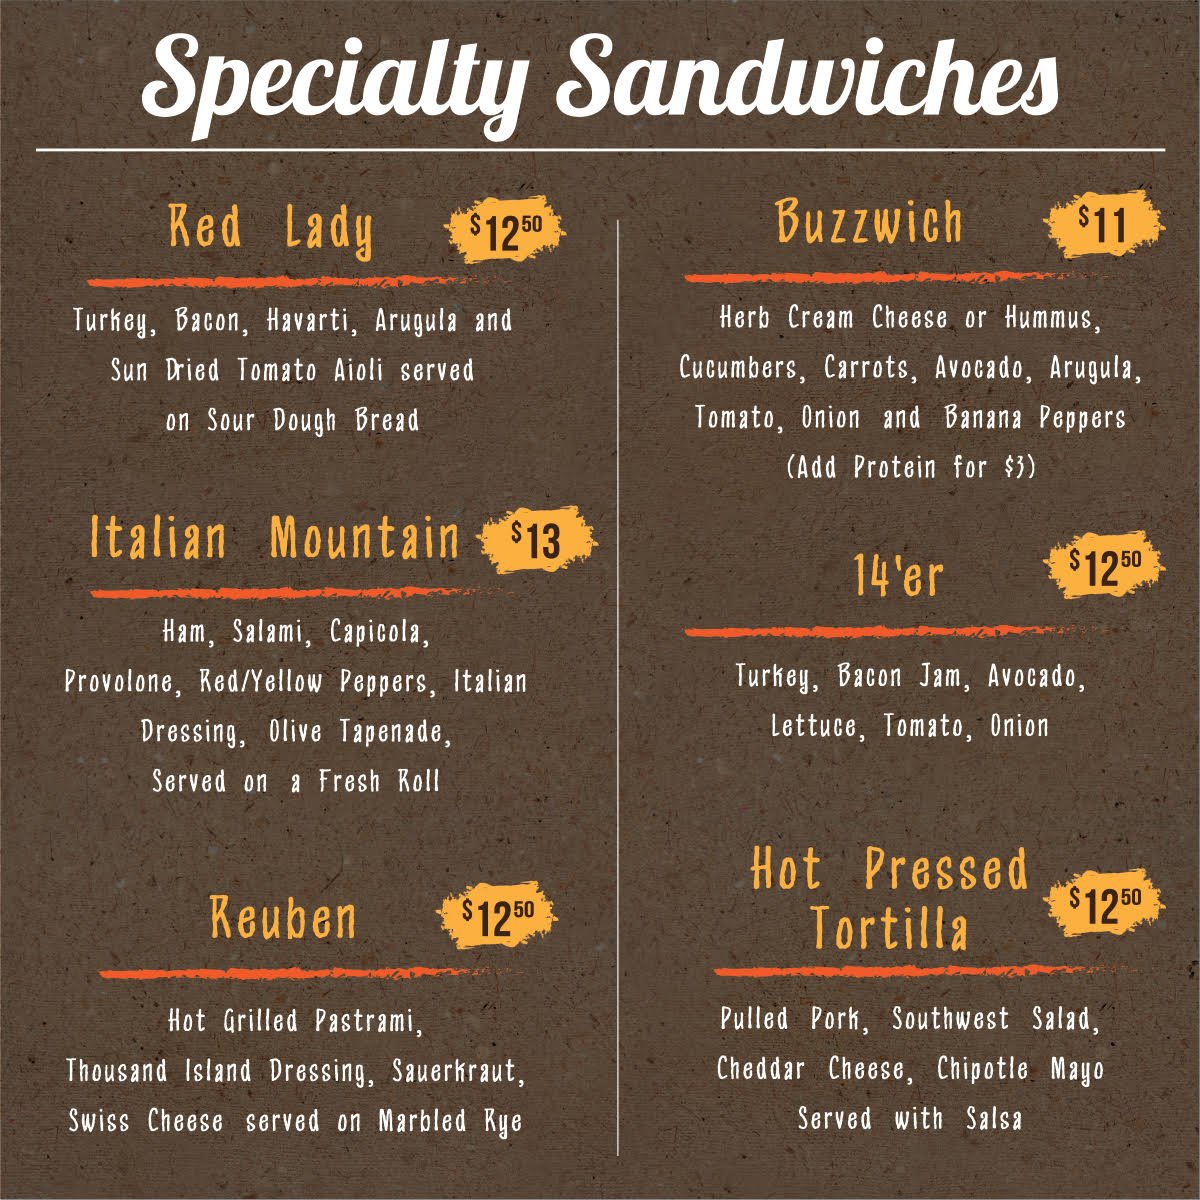 Franks Deli Crested Butte Menu Specialty Sandwiches.jpeg